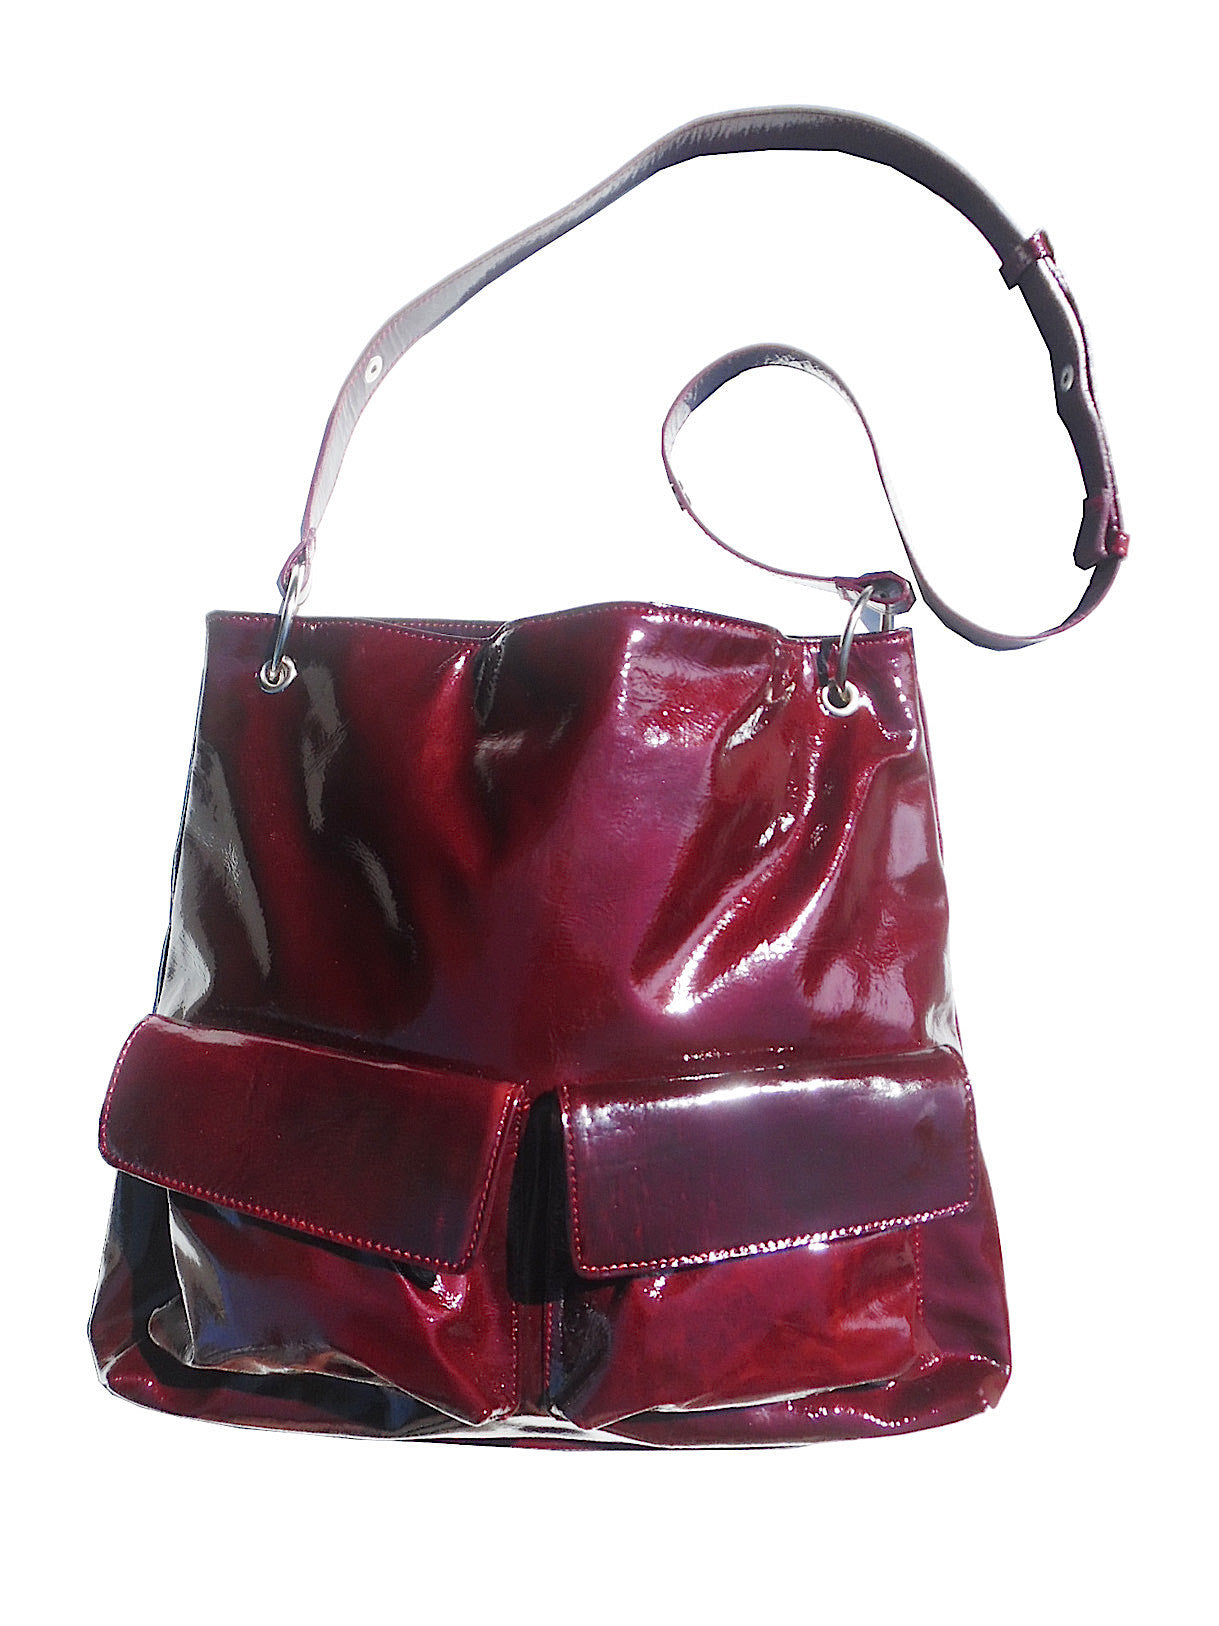 Gapock X Crossbody Travel Bag Patent Leather Wine